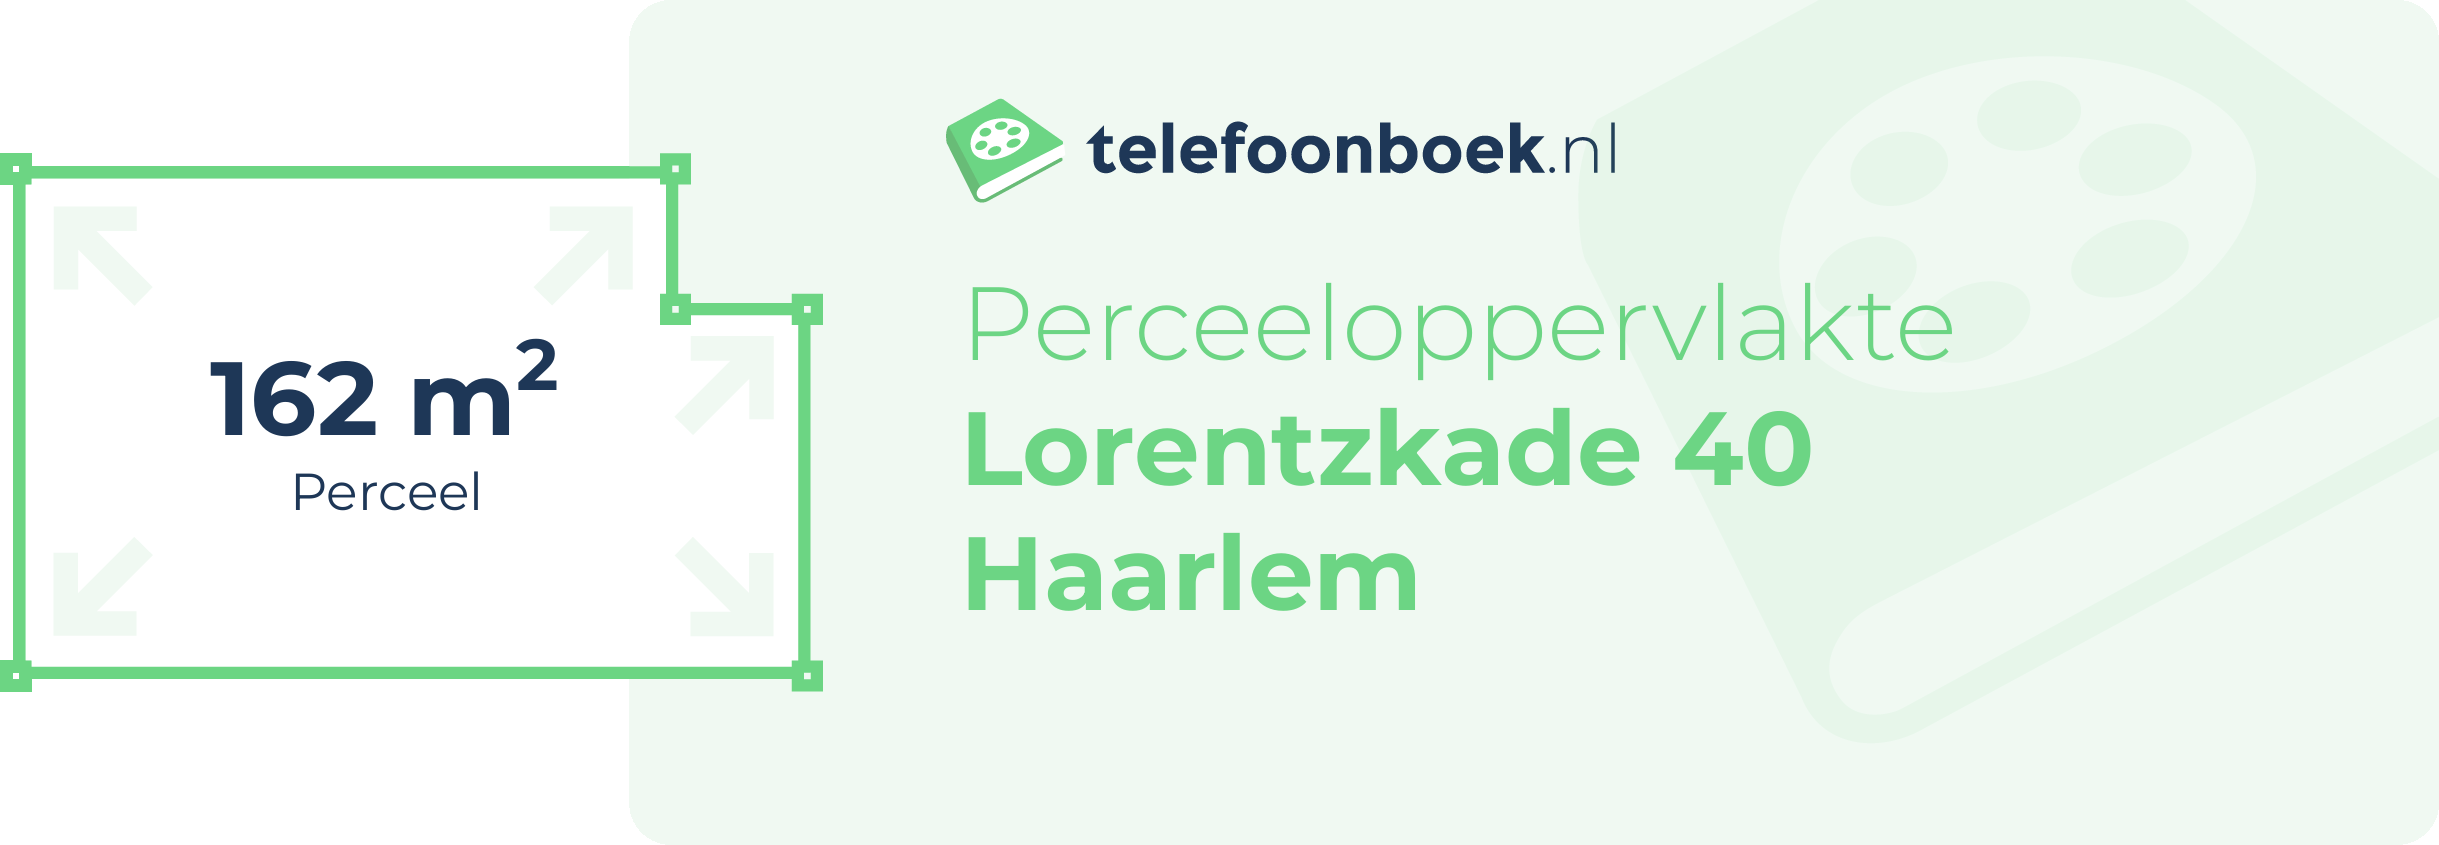 Perceeloppervlakte Lorentzkade 40 Haarlem